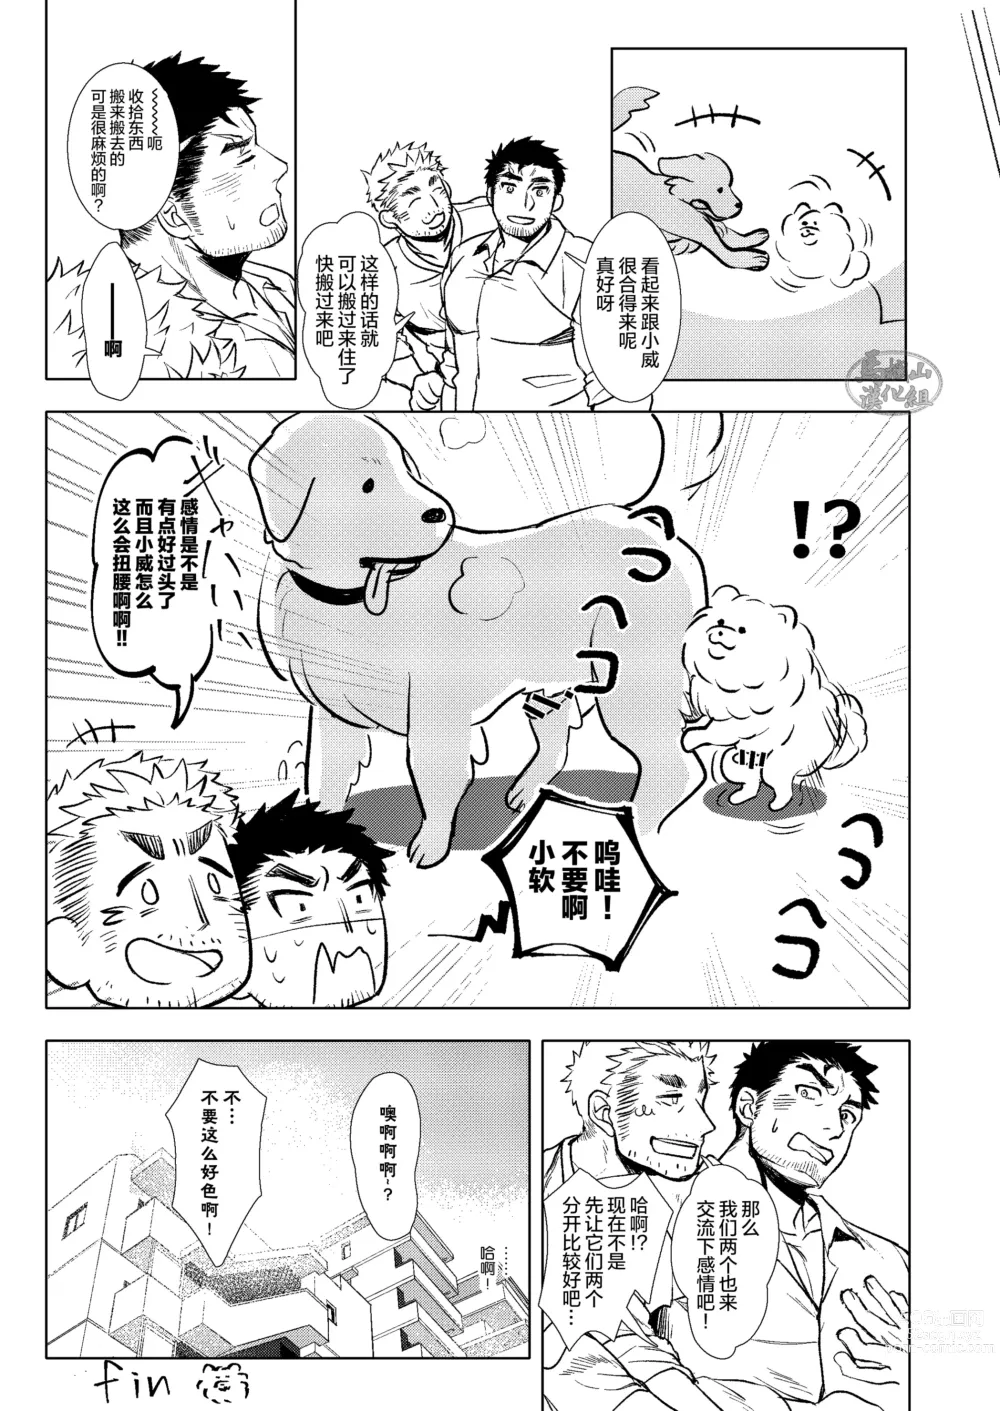 Page 25 of doujinshi 忠犬情缘